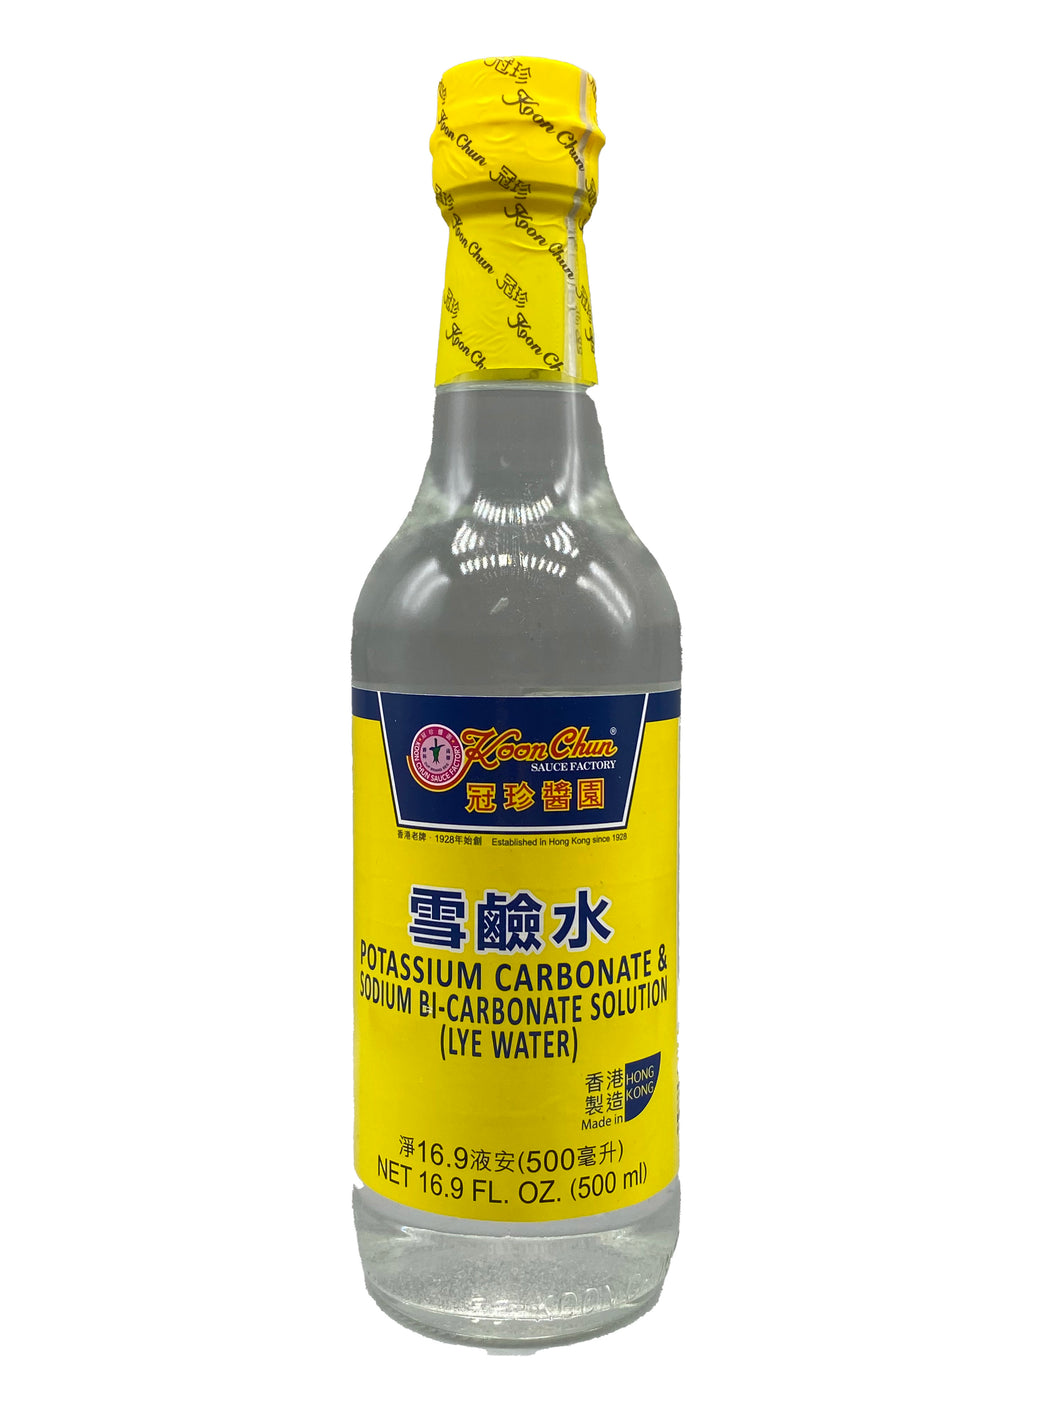 Koon Chun Potassium Carbonate (Lye Water) – Asia Mart, Santa Rosa